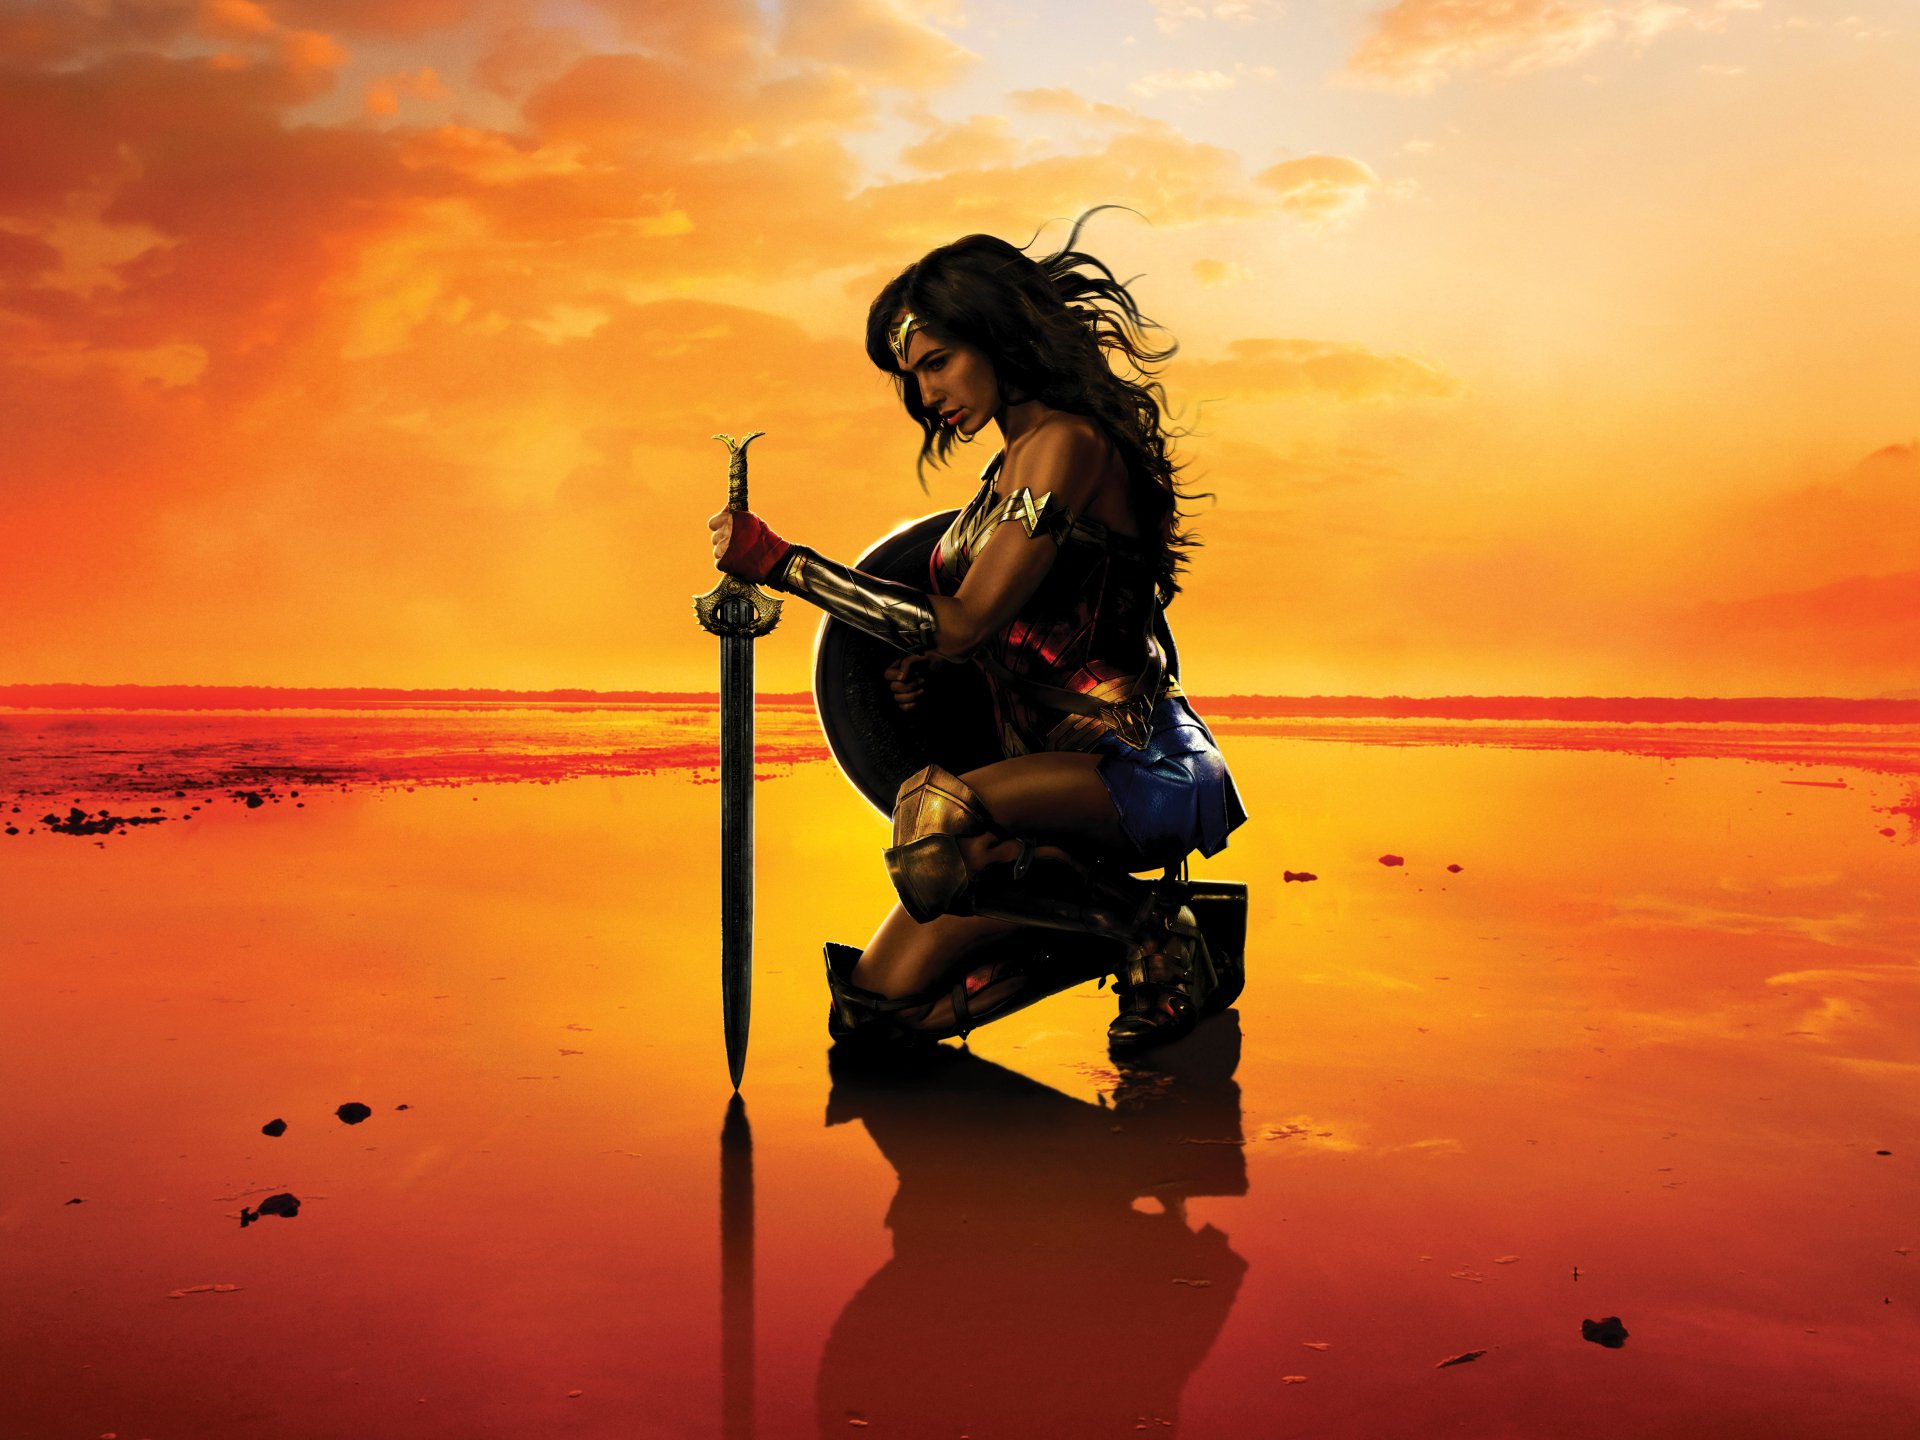 Download DC Comics Sword Gal Gadot Movie Wonder Woman  4k Ultra HD Wallpaper